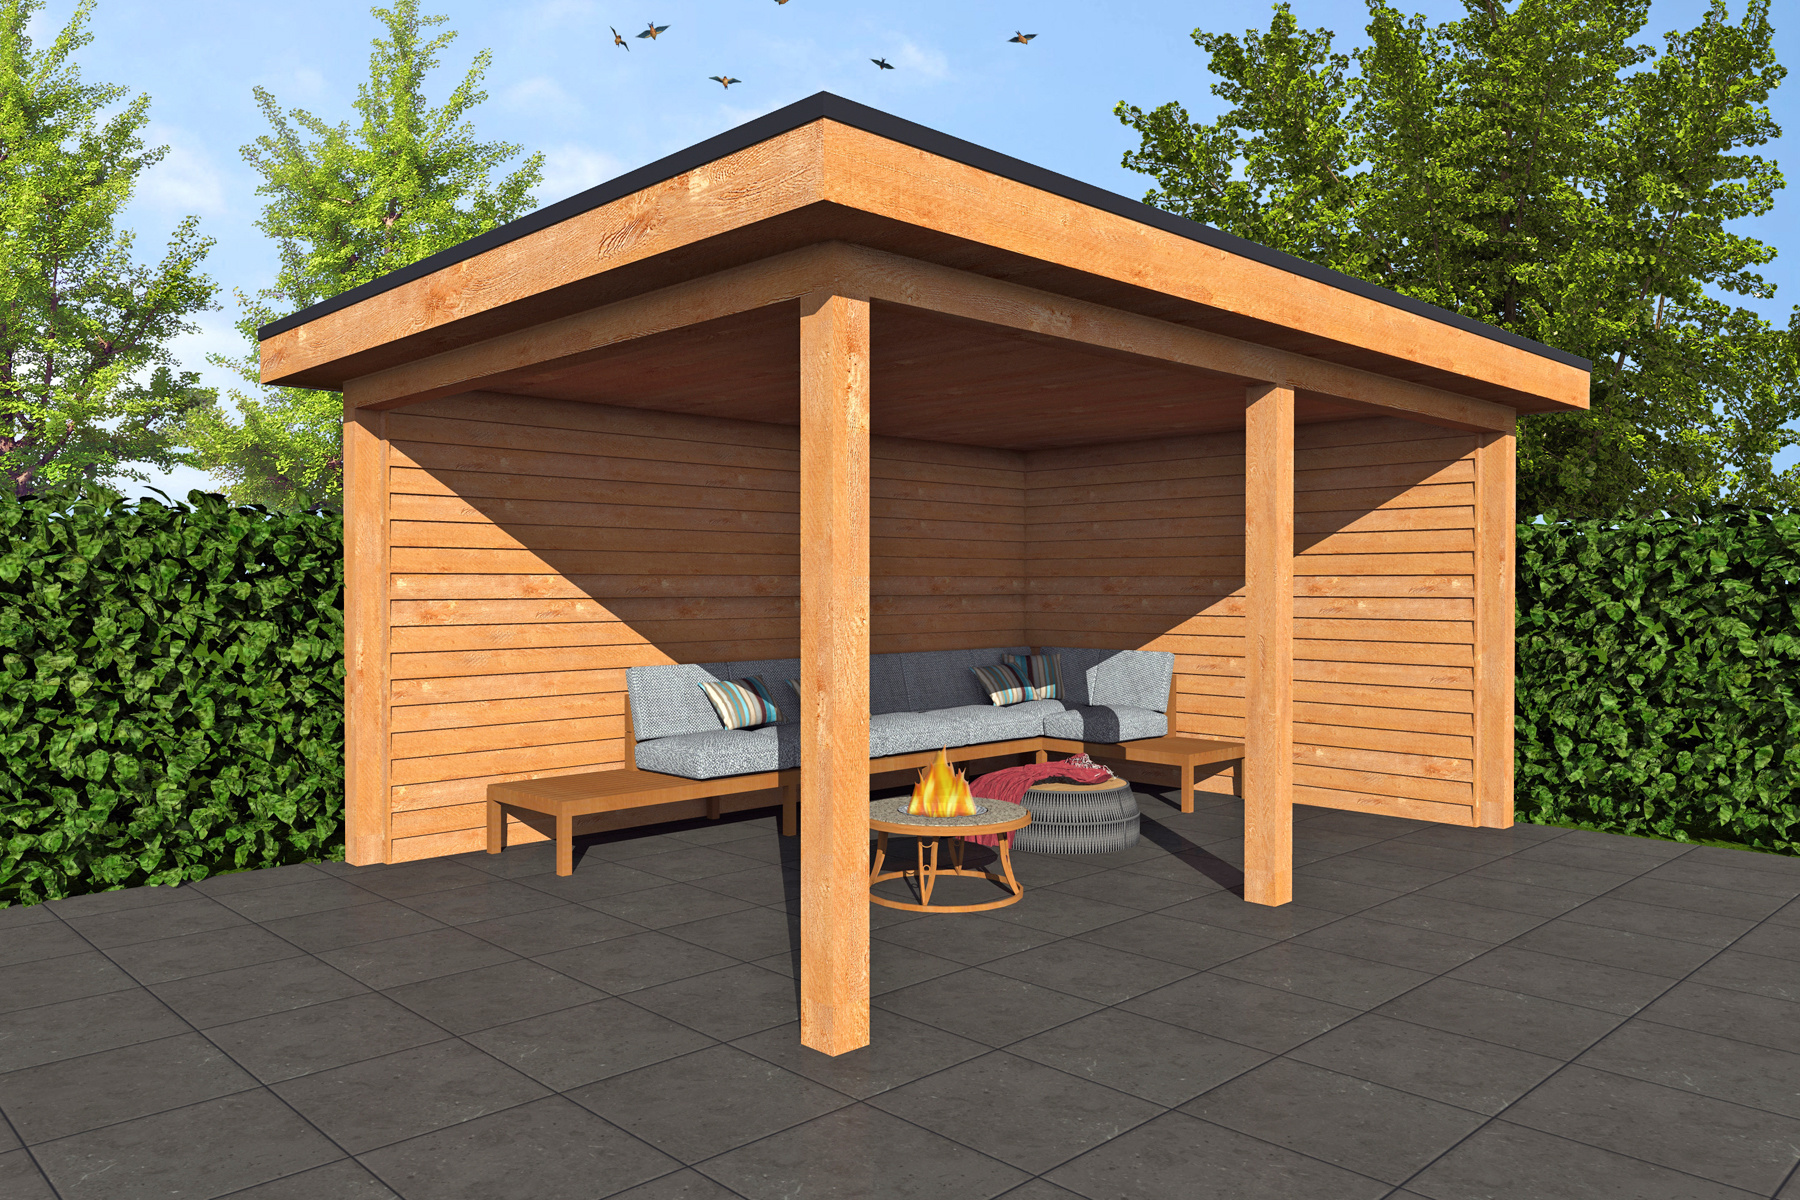 Vervorming vervolging Stout Houten veranda plat dak 750 x 400 cm | Gratis thuisbezorgd in NL -  Moduhout.nl